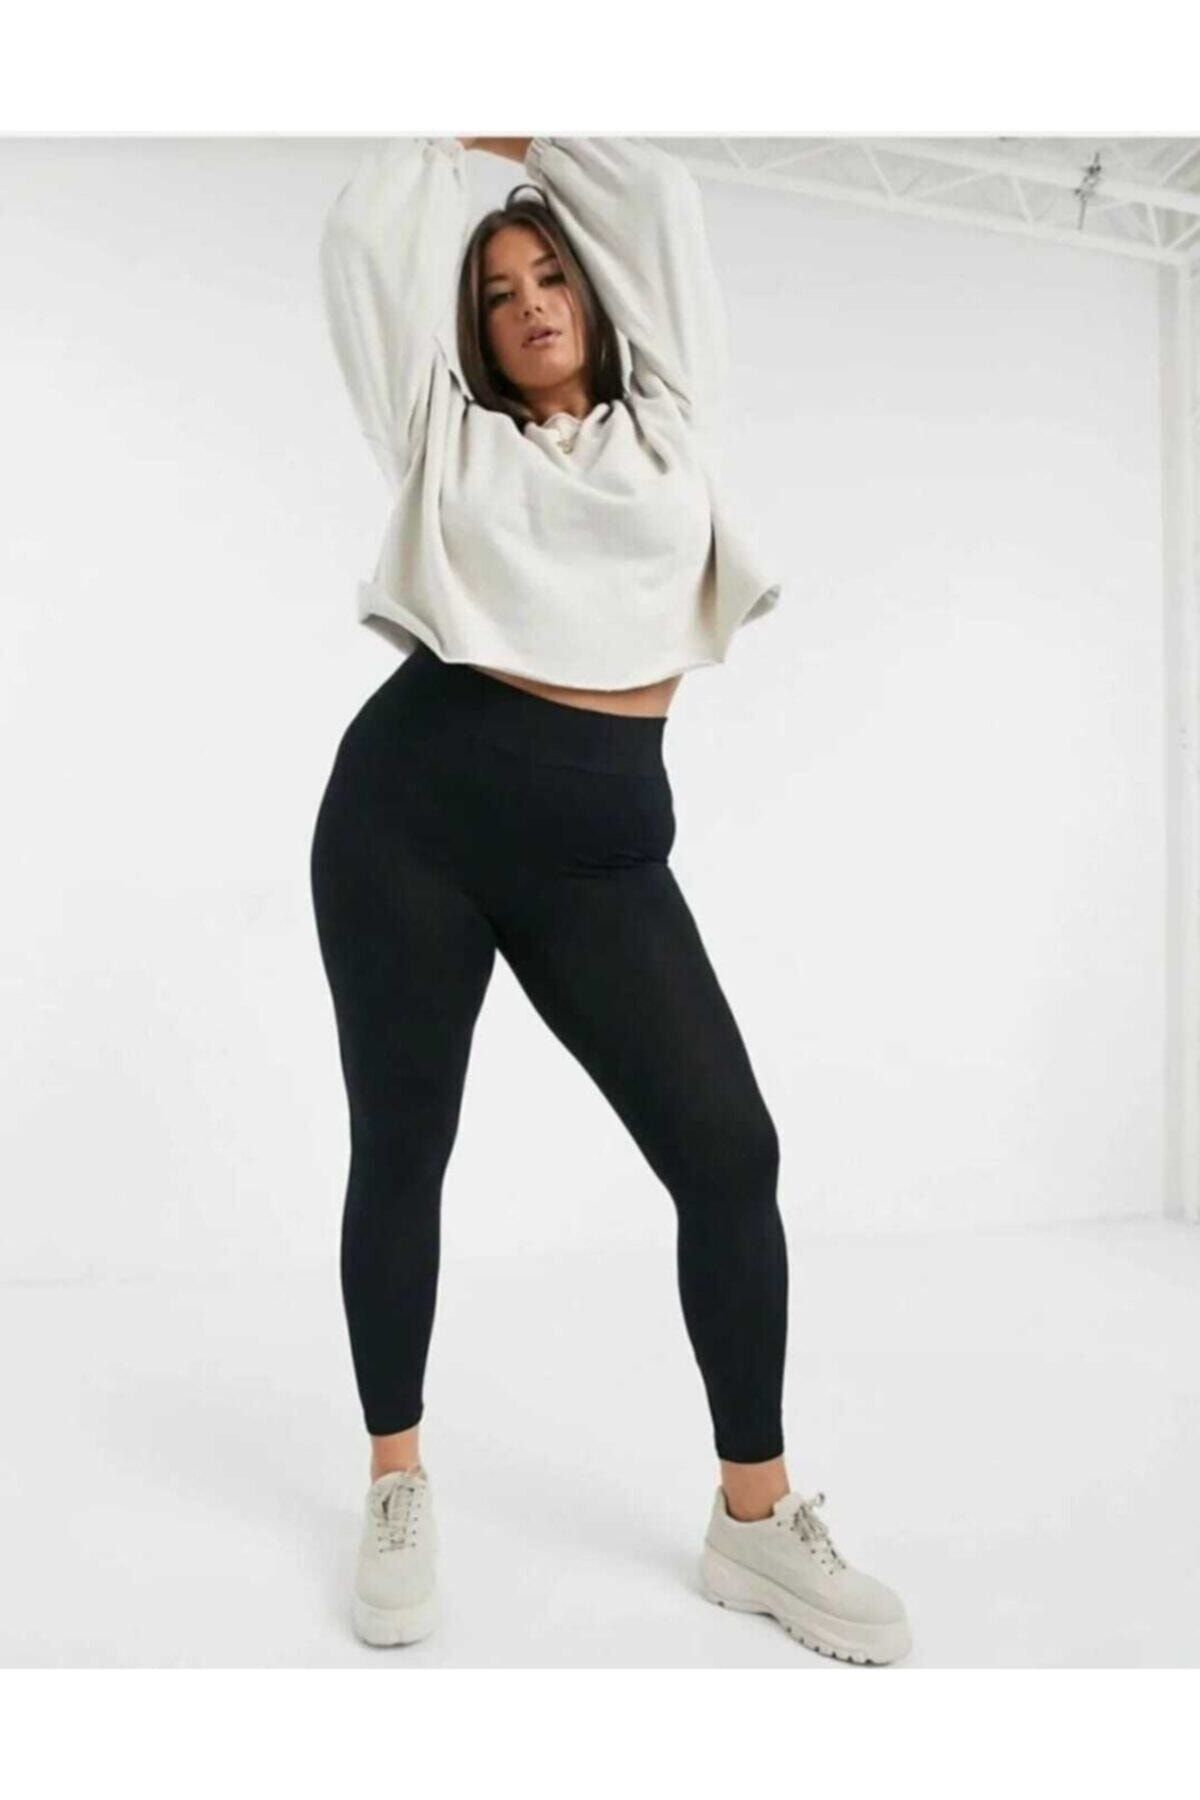 gvdentm Plus Size Leggings for Women Women's Black Satin Side Lacing Solid  Pants Long Bodycon High Waist Bandage Slim Thick Lace Up Leggings -  Walmart.com